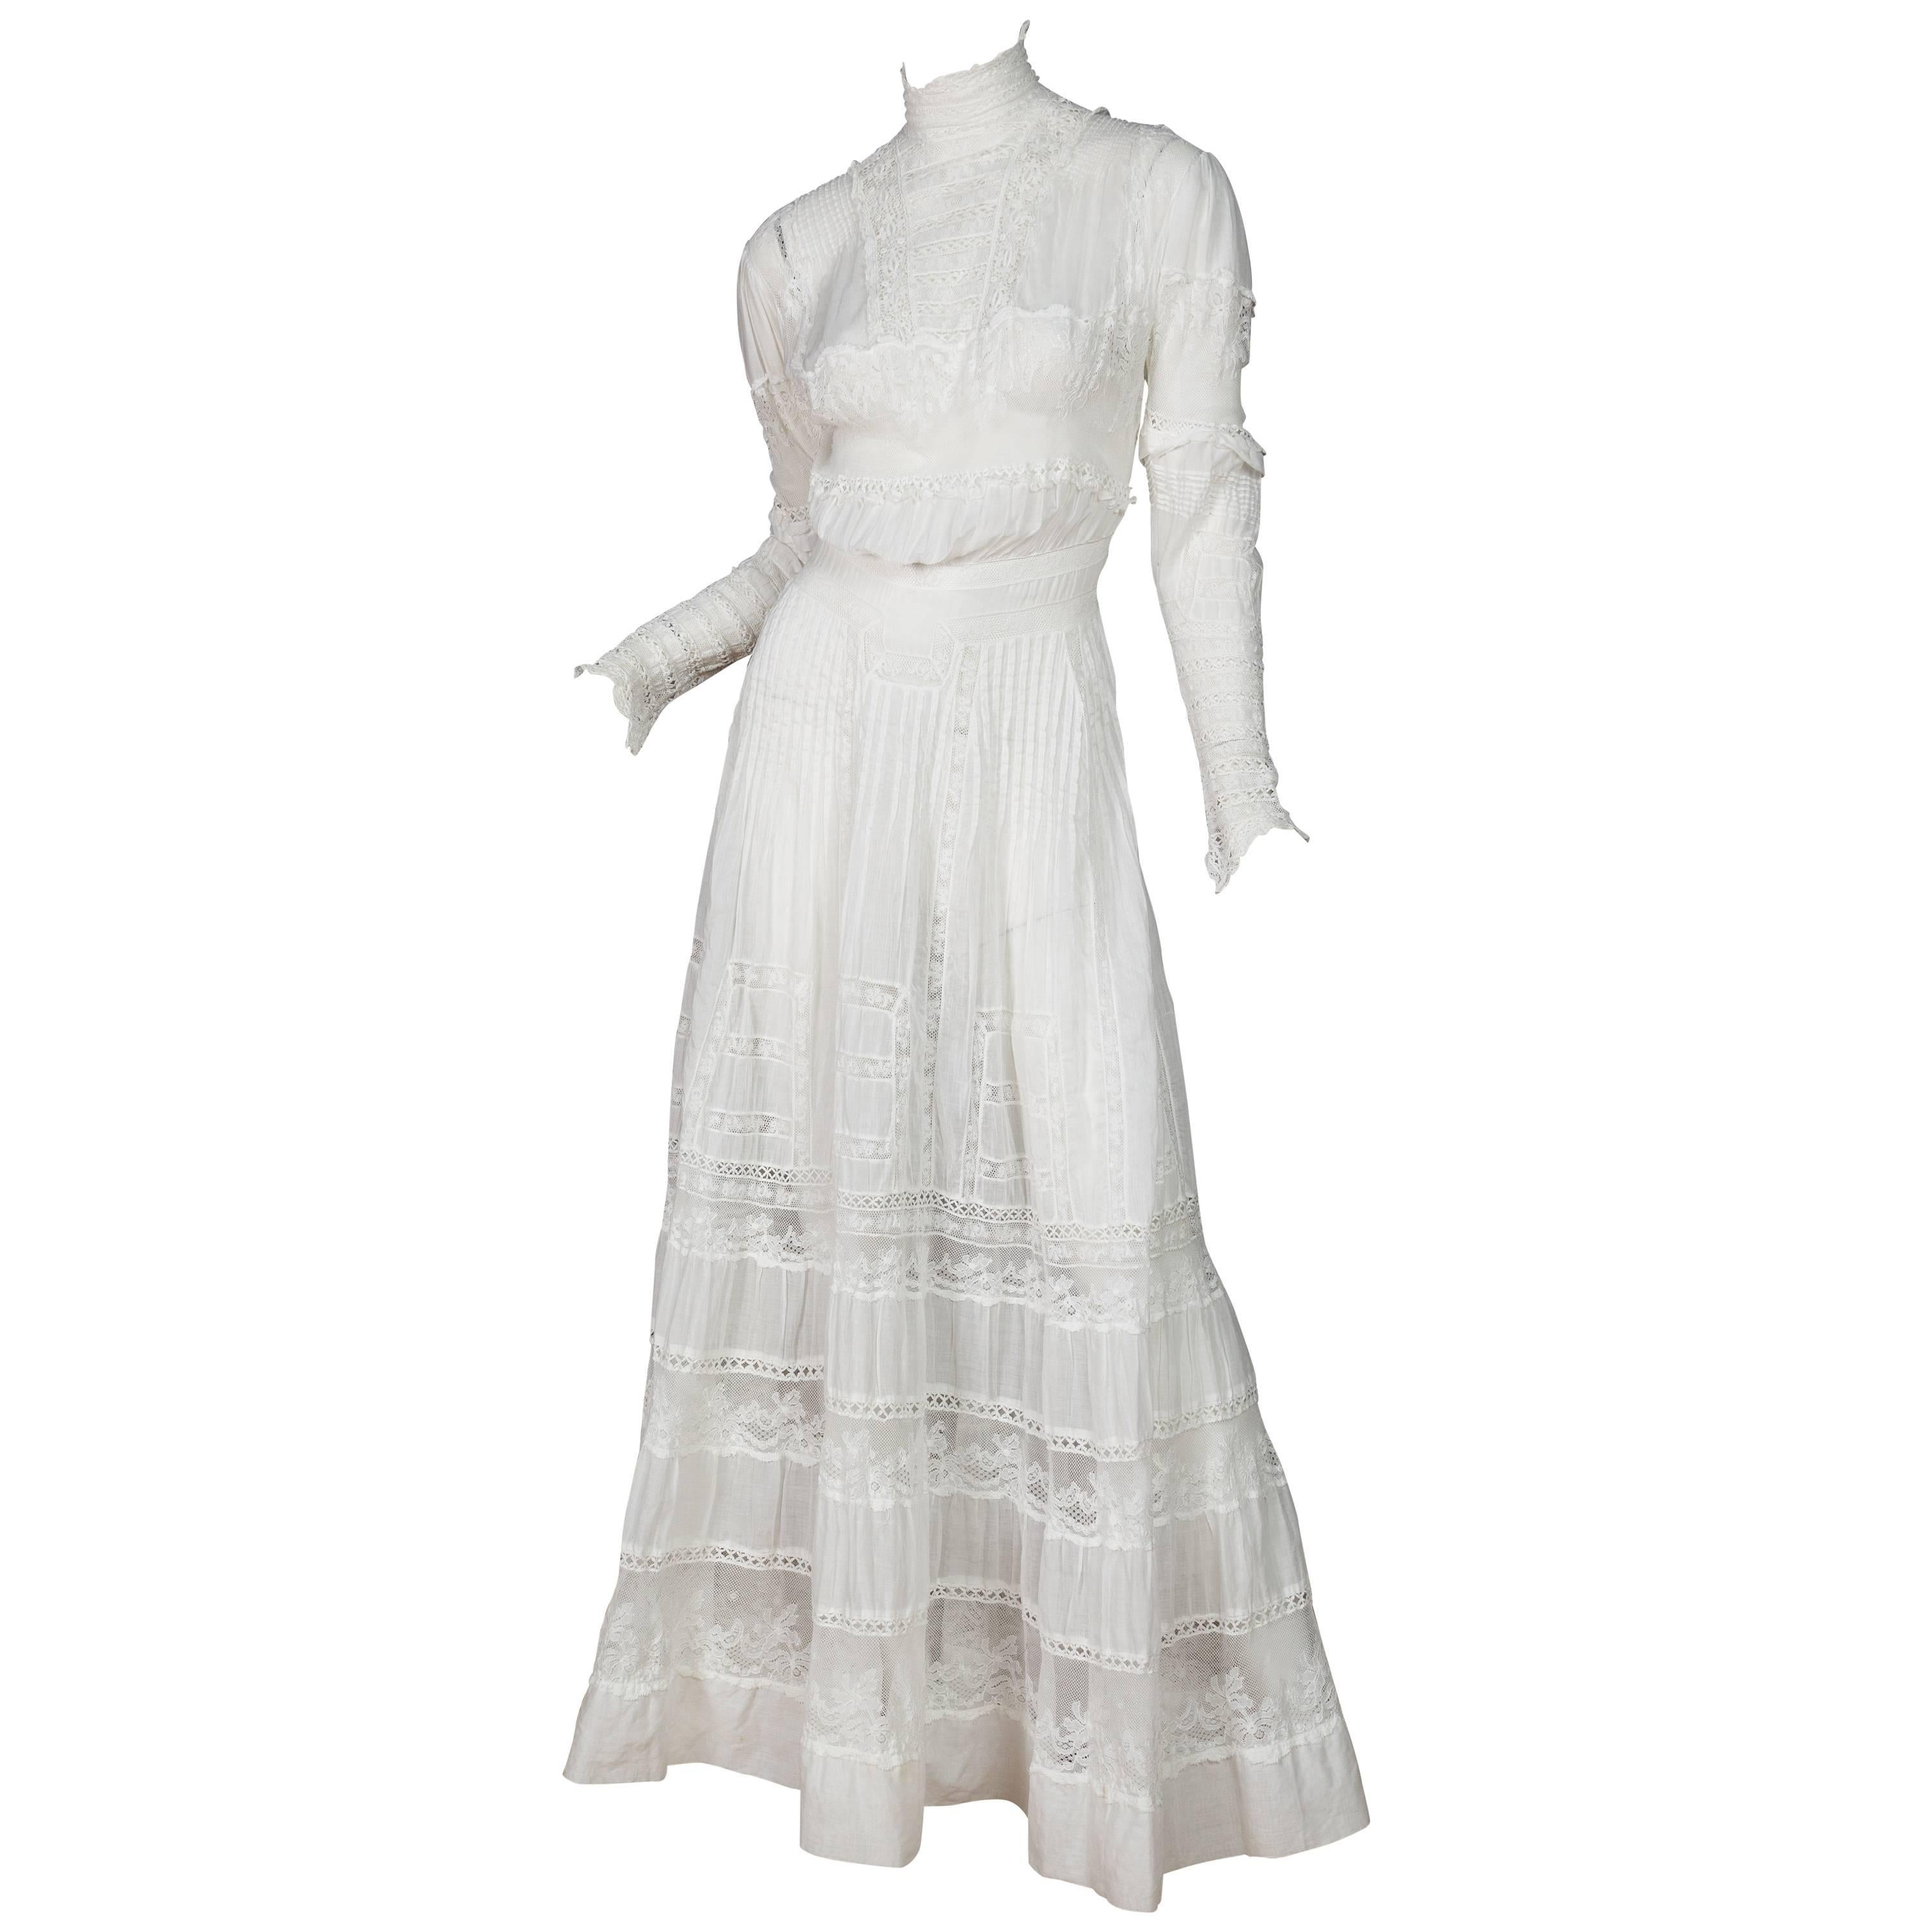 Circa 1900 Victorian Lace and Cotton Tea Dress